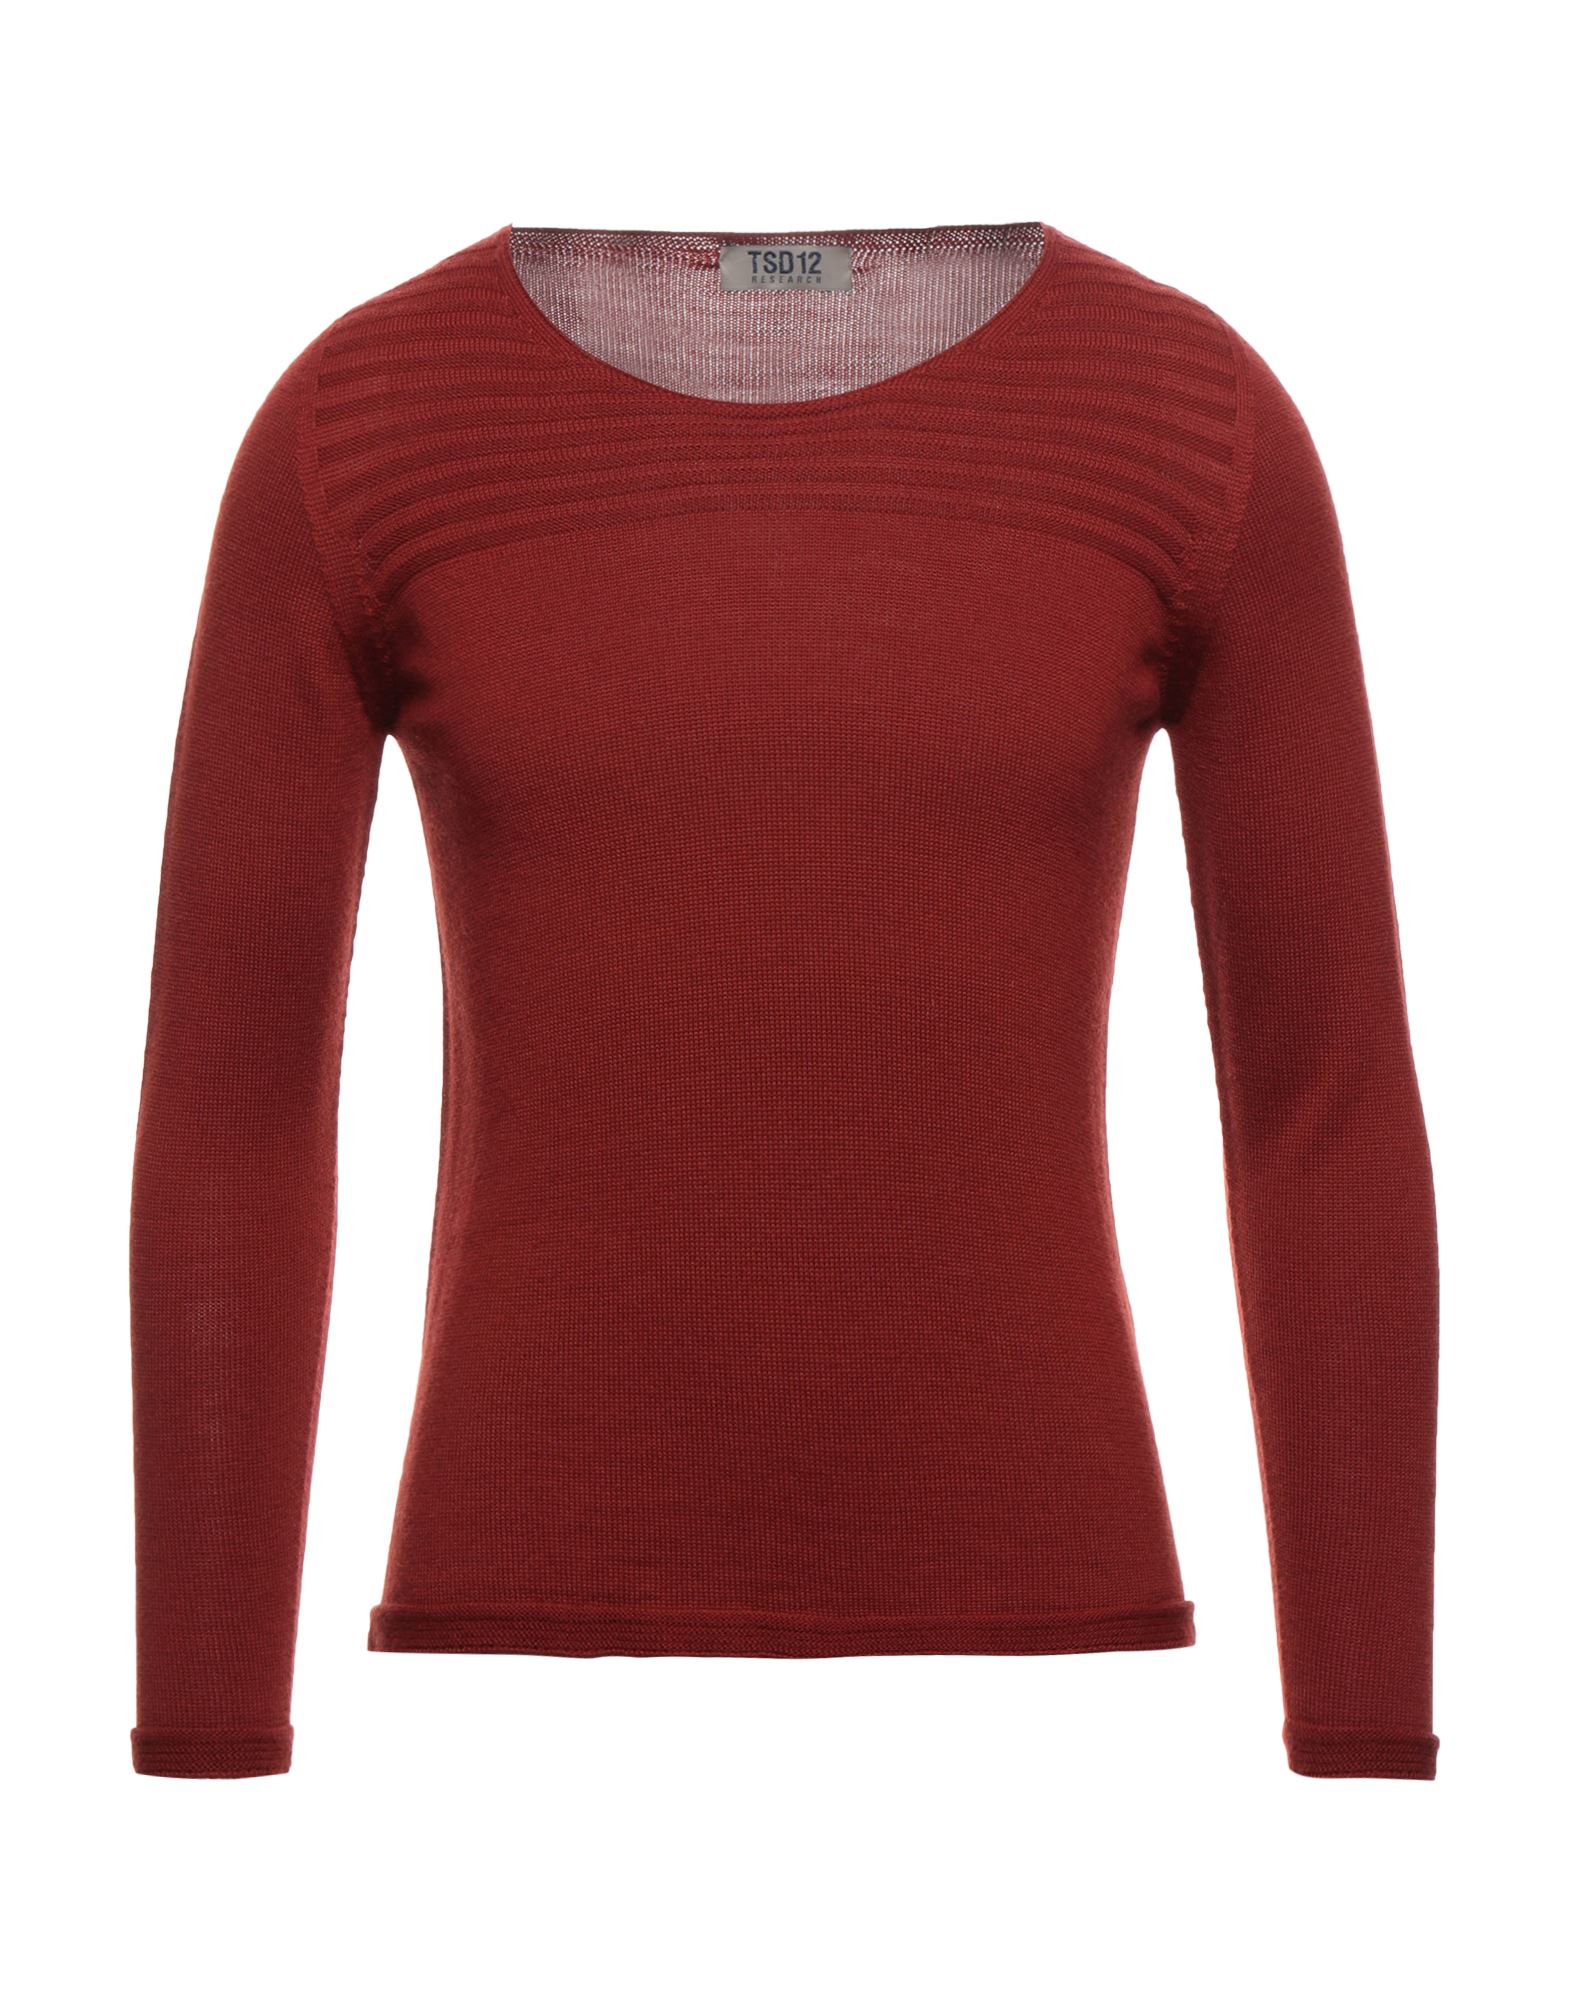 Tsd12 Man Sweater Brick Red Size L Merino Wool, Acrylic